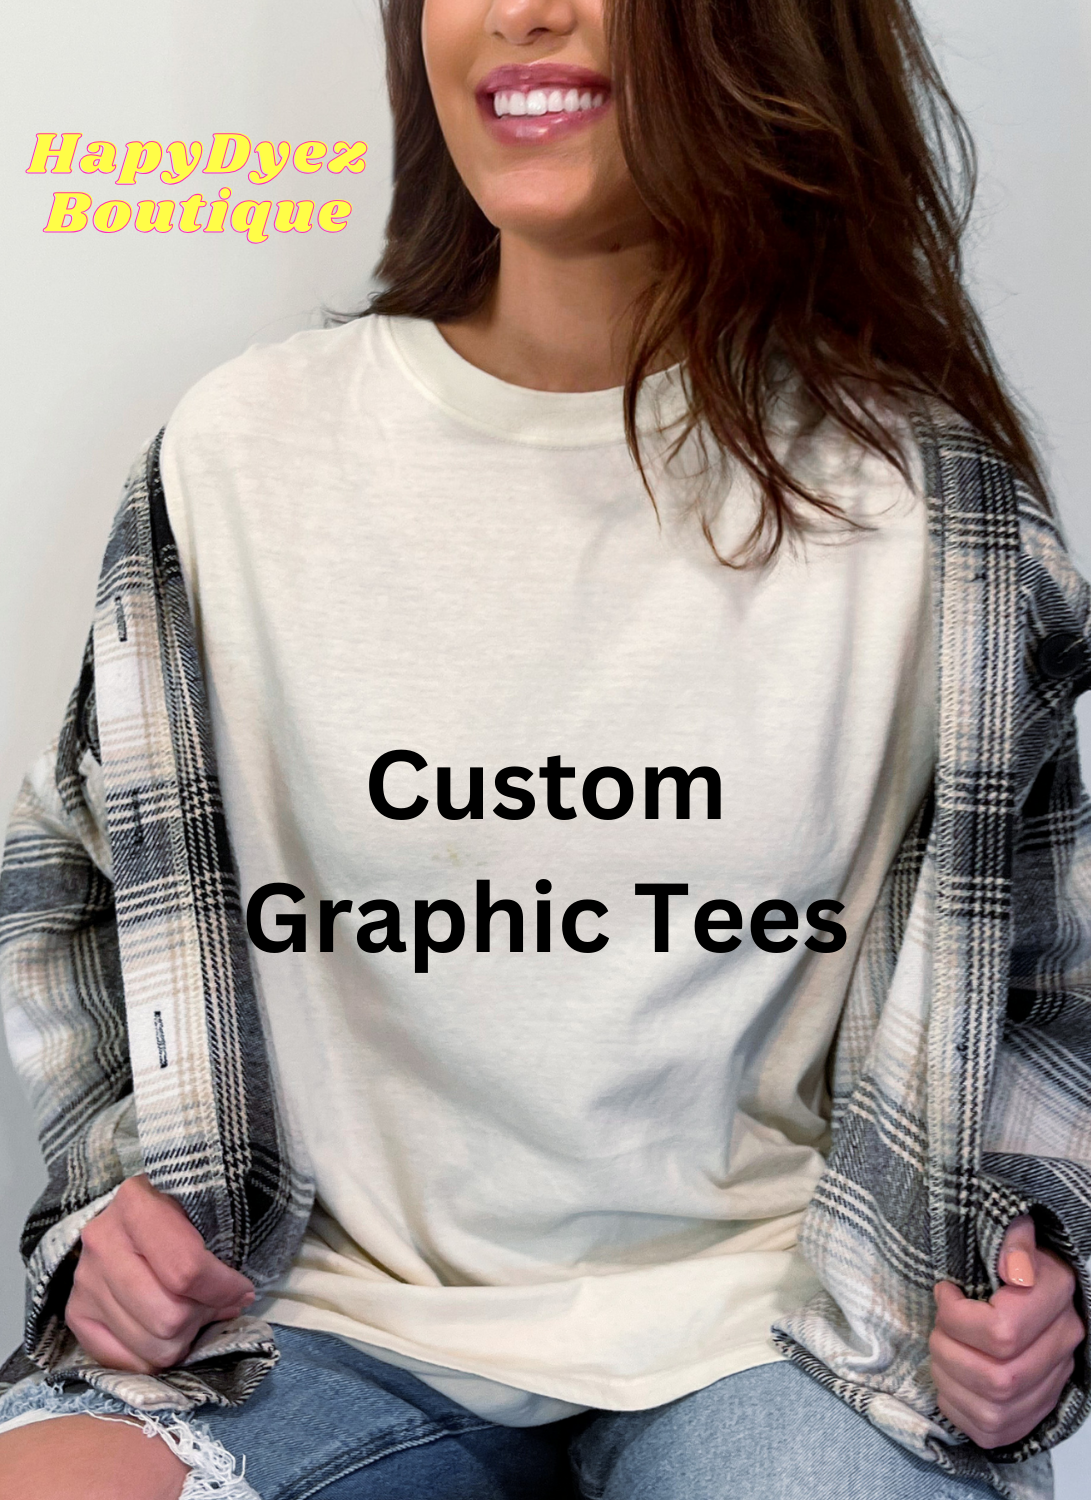 Graphic T-Shirts & Sweatshirts